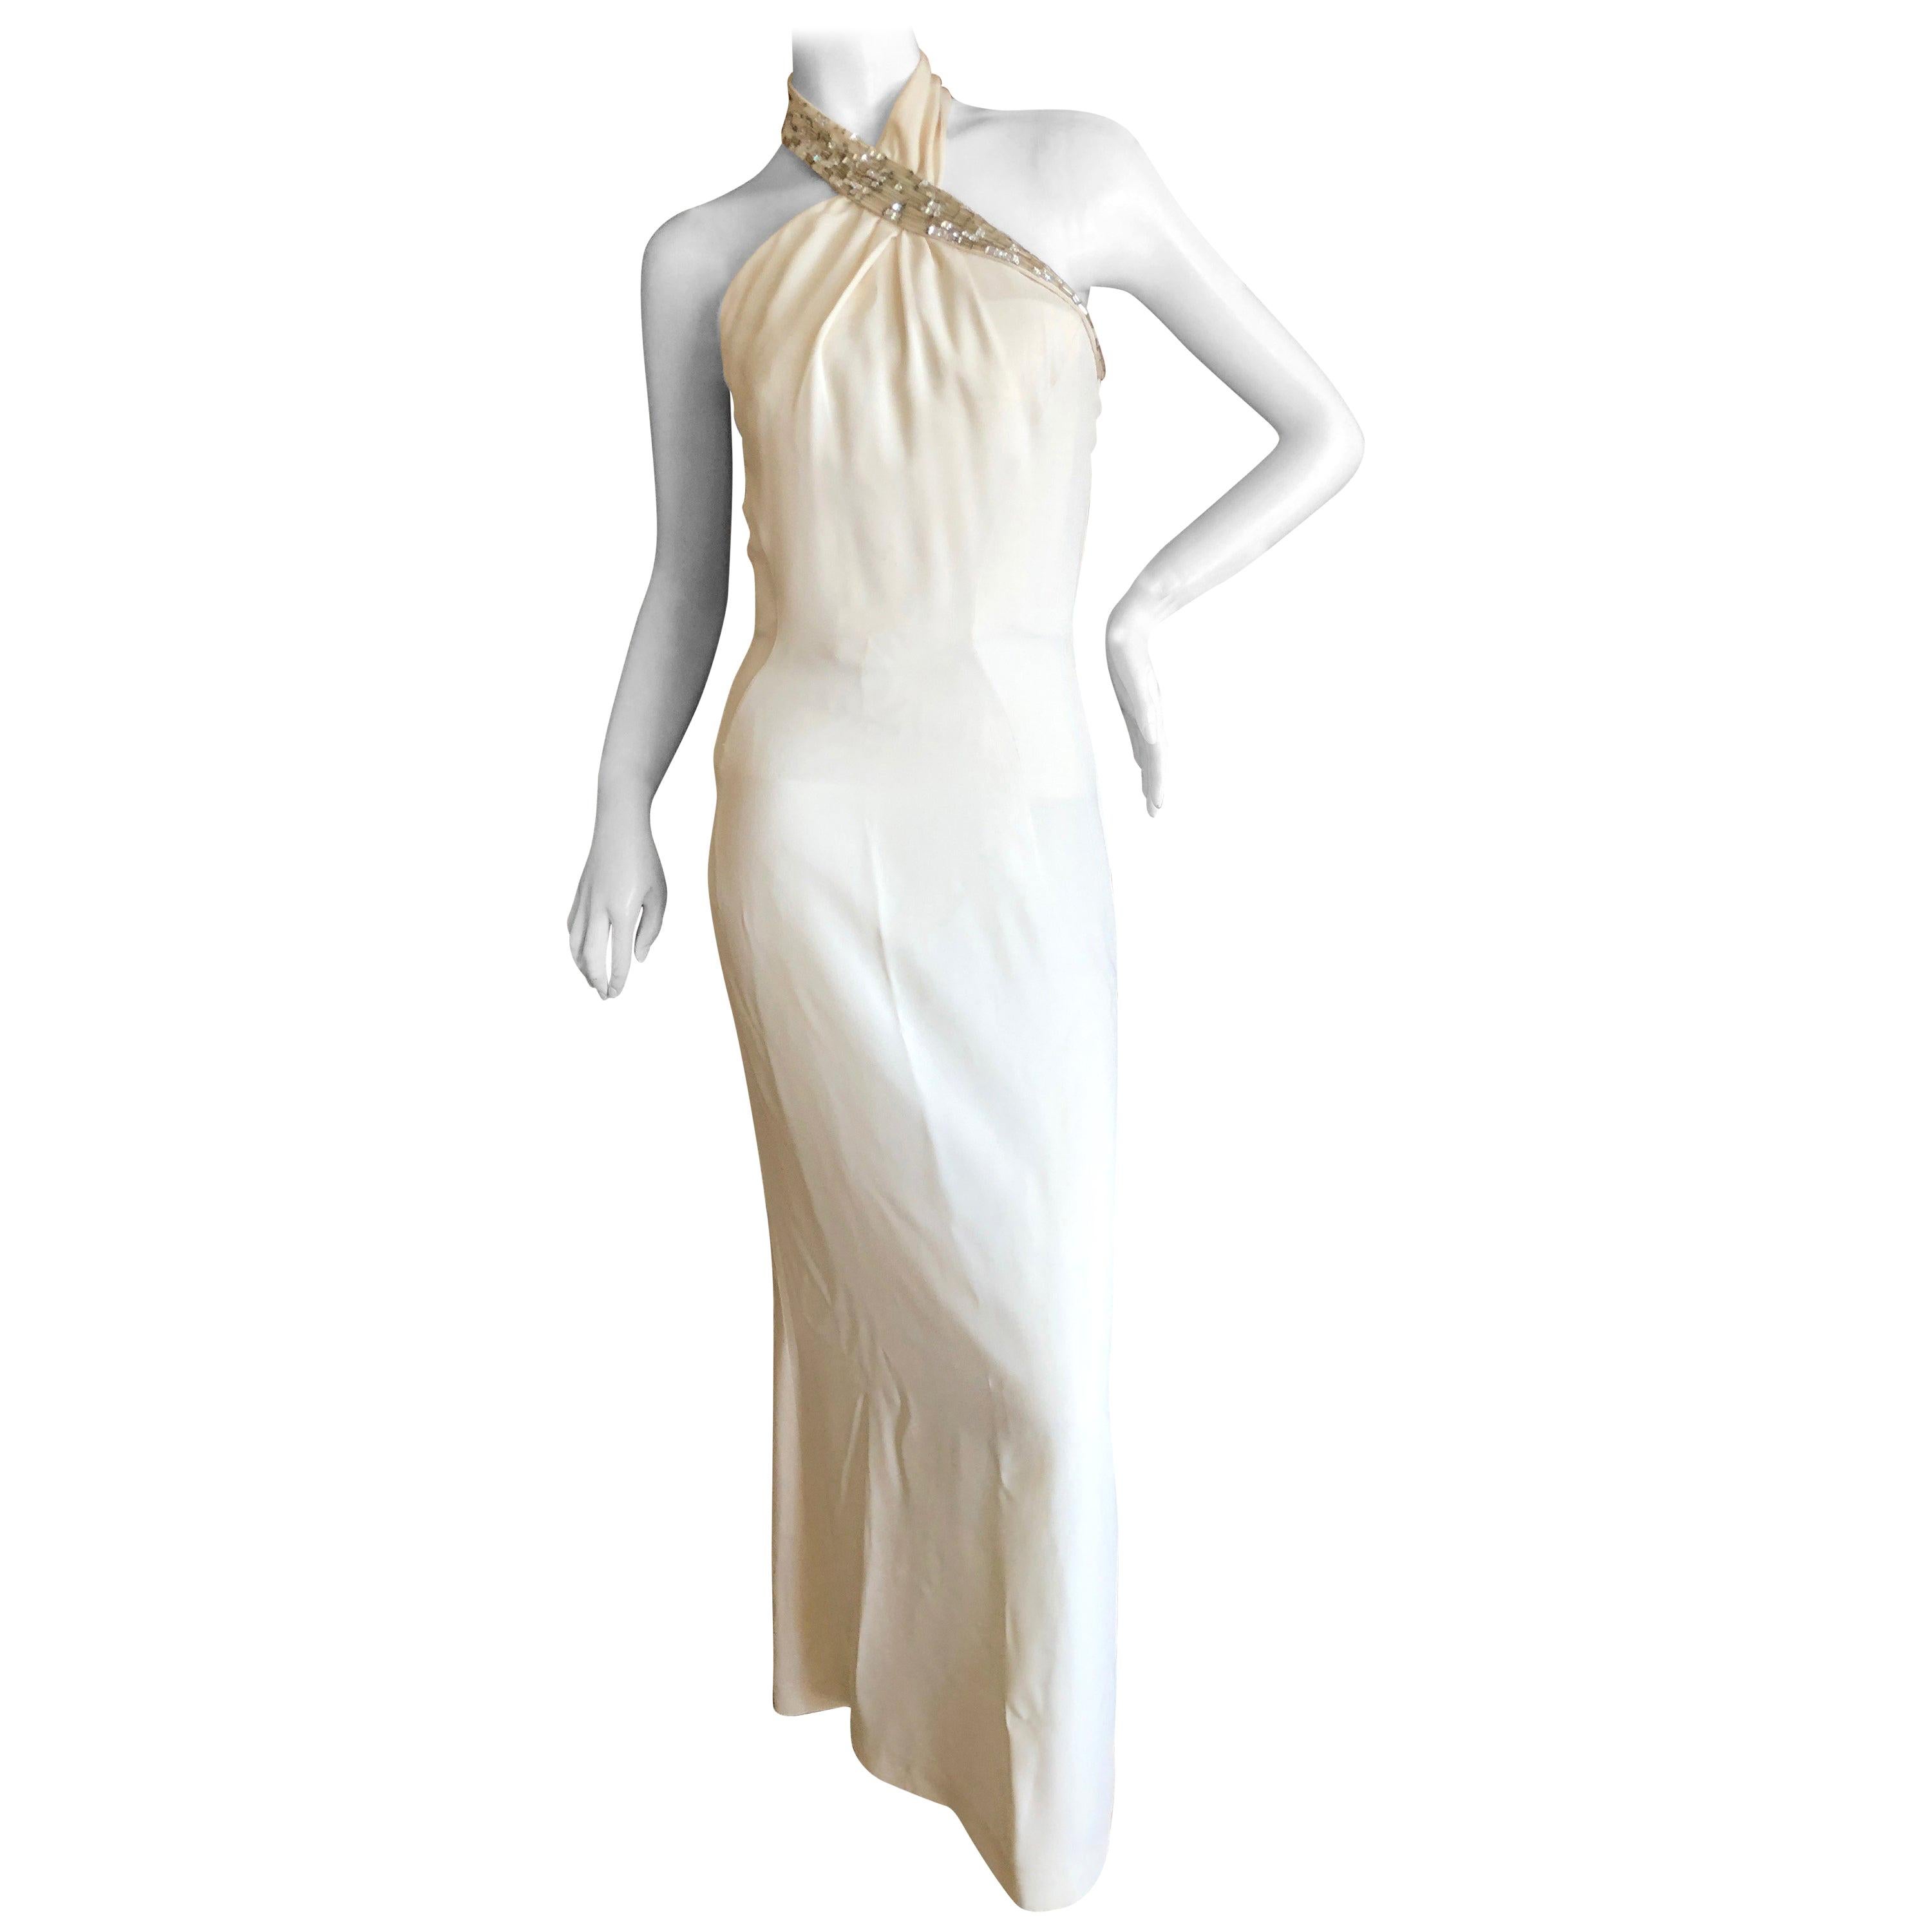 Thierry Mugler 1980's Vintage  Ivory Halter Dress with Crystal Embellished Yoke For Sale